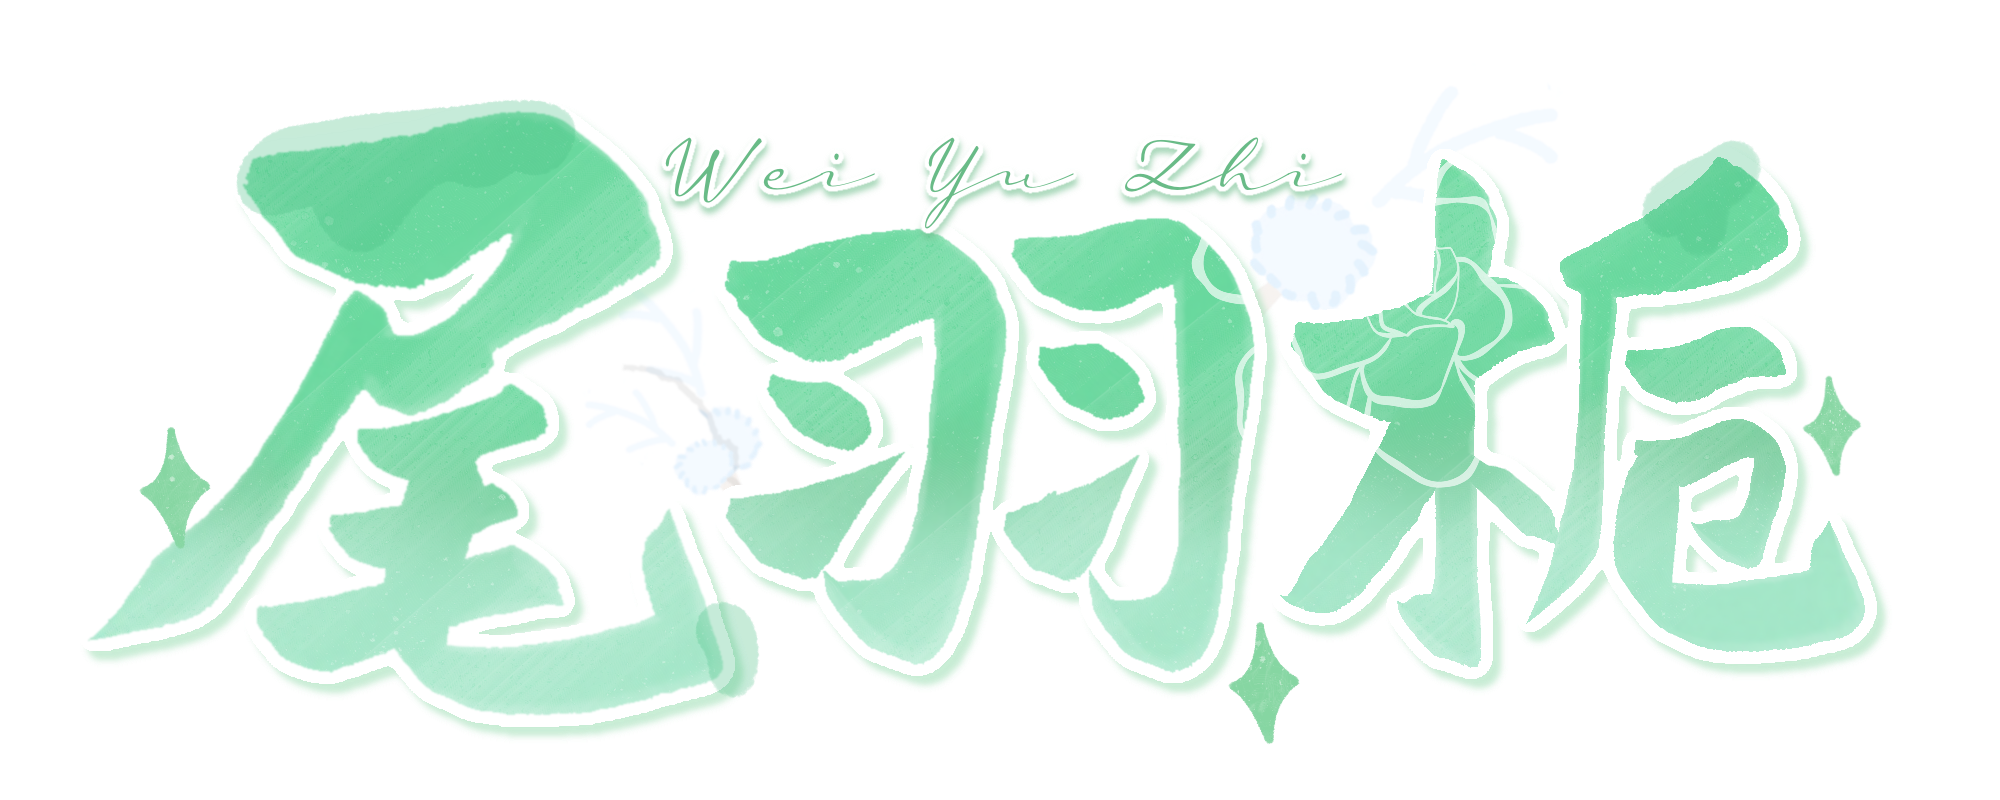 尾羽梔logo.png